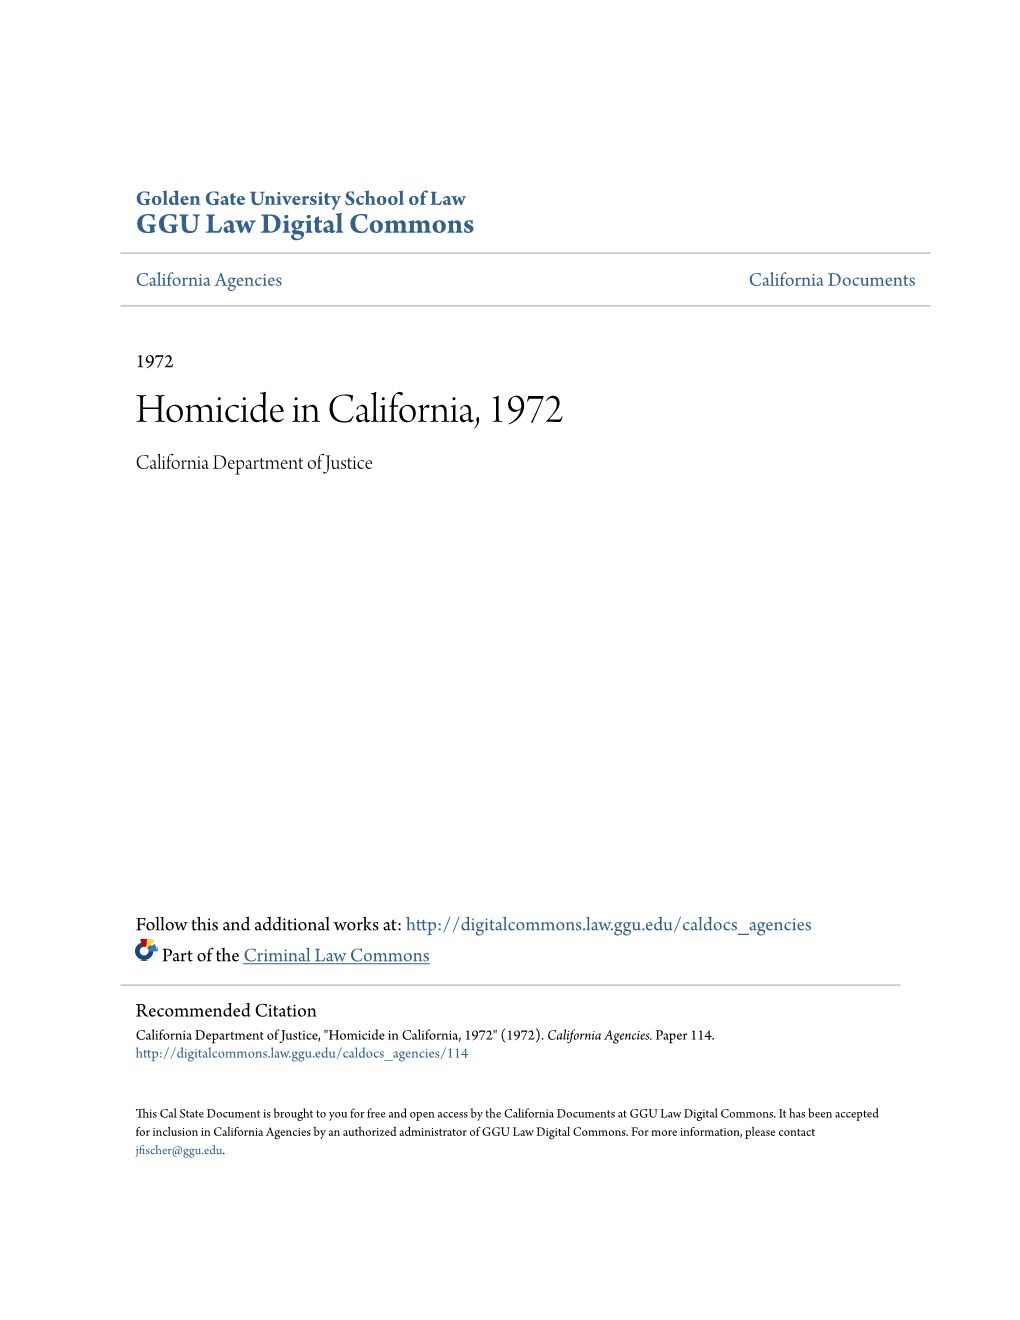 Homicide in California, 1972 California Department of Justice